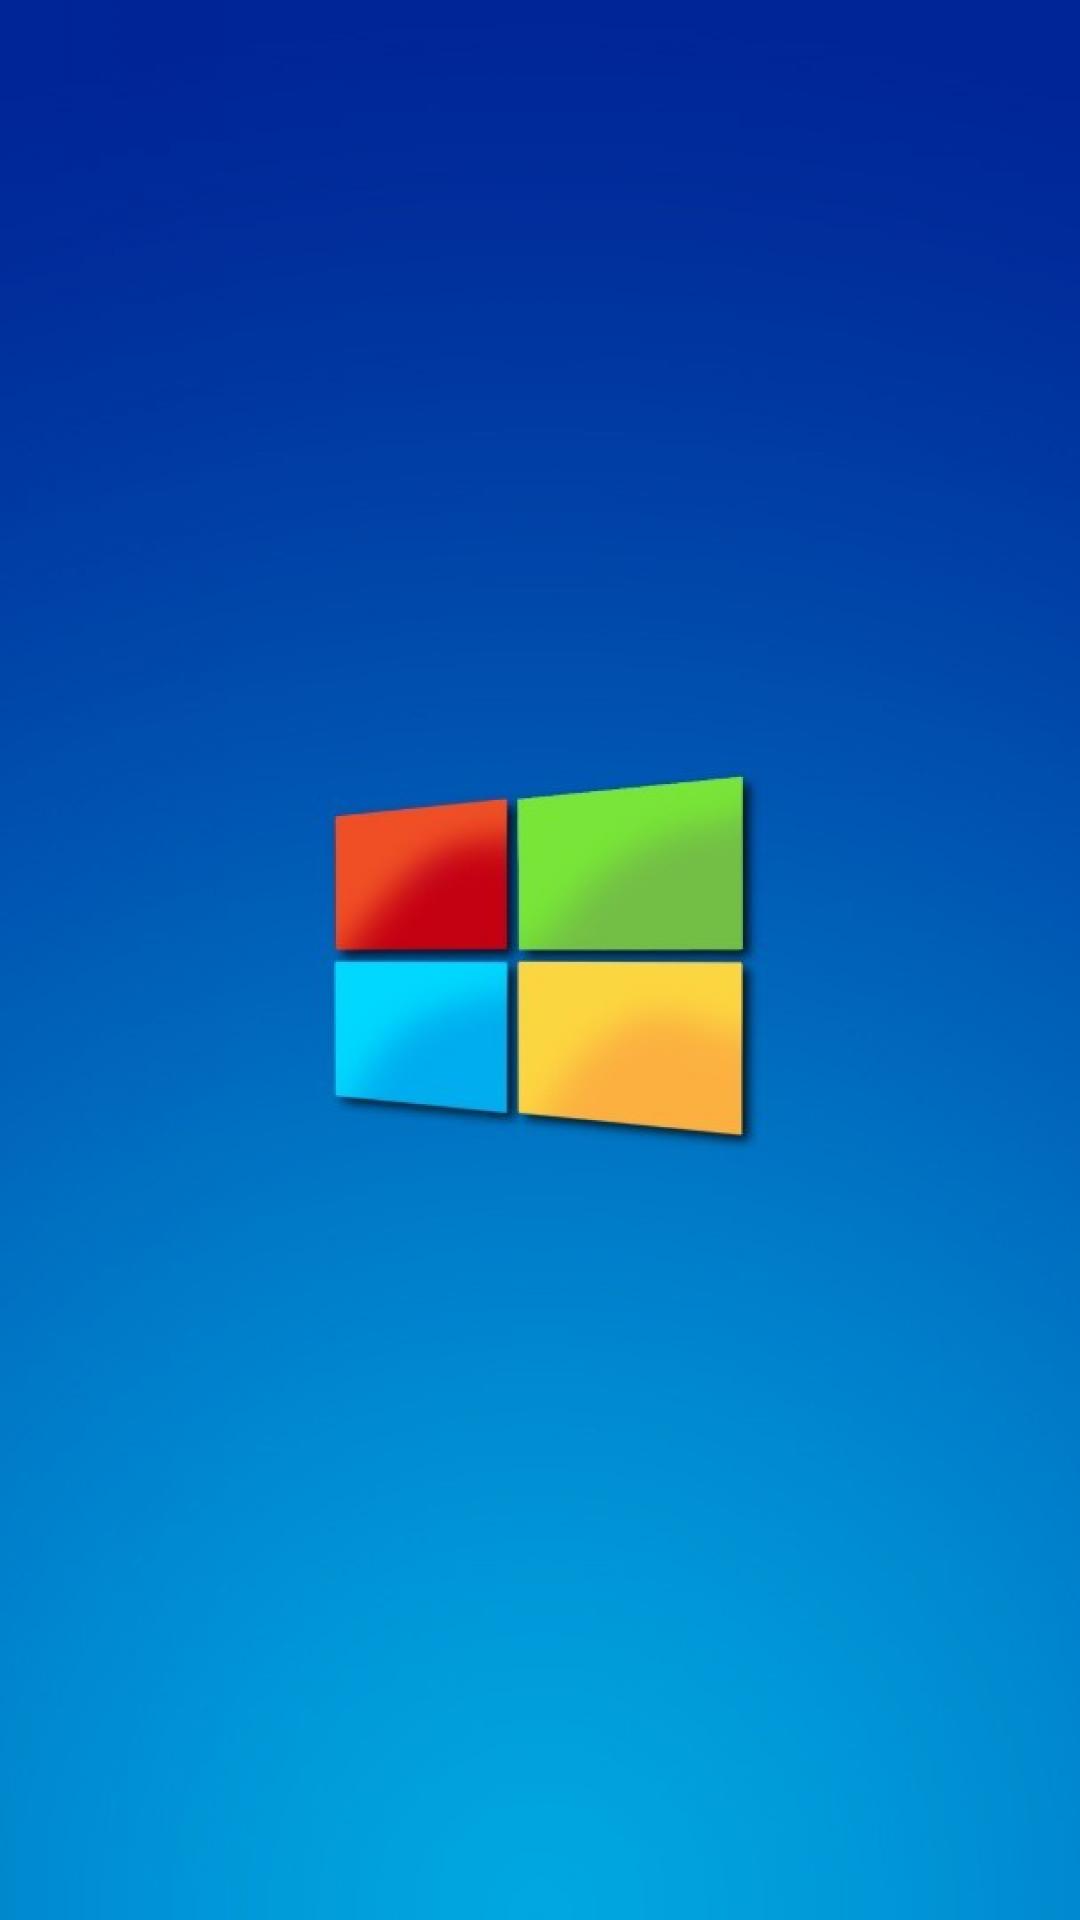 Windows 10 Mobile Wallpapers Hd - Nokia Lumia Window 8 - 1080x1920 Wallpaper  